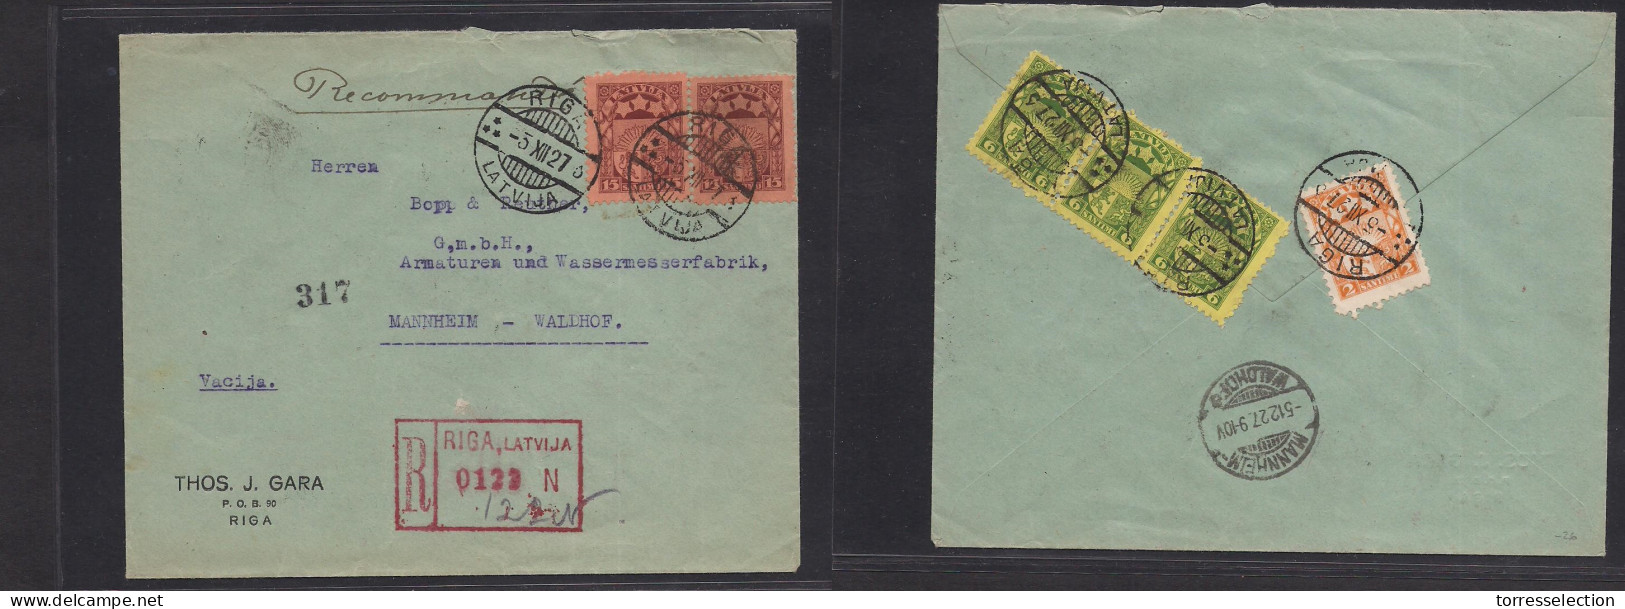 LATVIA. 1927 (3 Dec) Riga - Germany, Mannheim (5 Dec) Registered Front + Reverse Envelope. VF. - Latvia